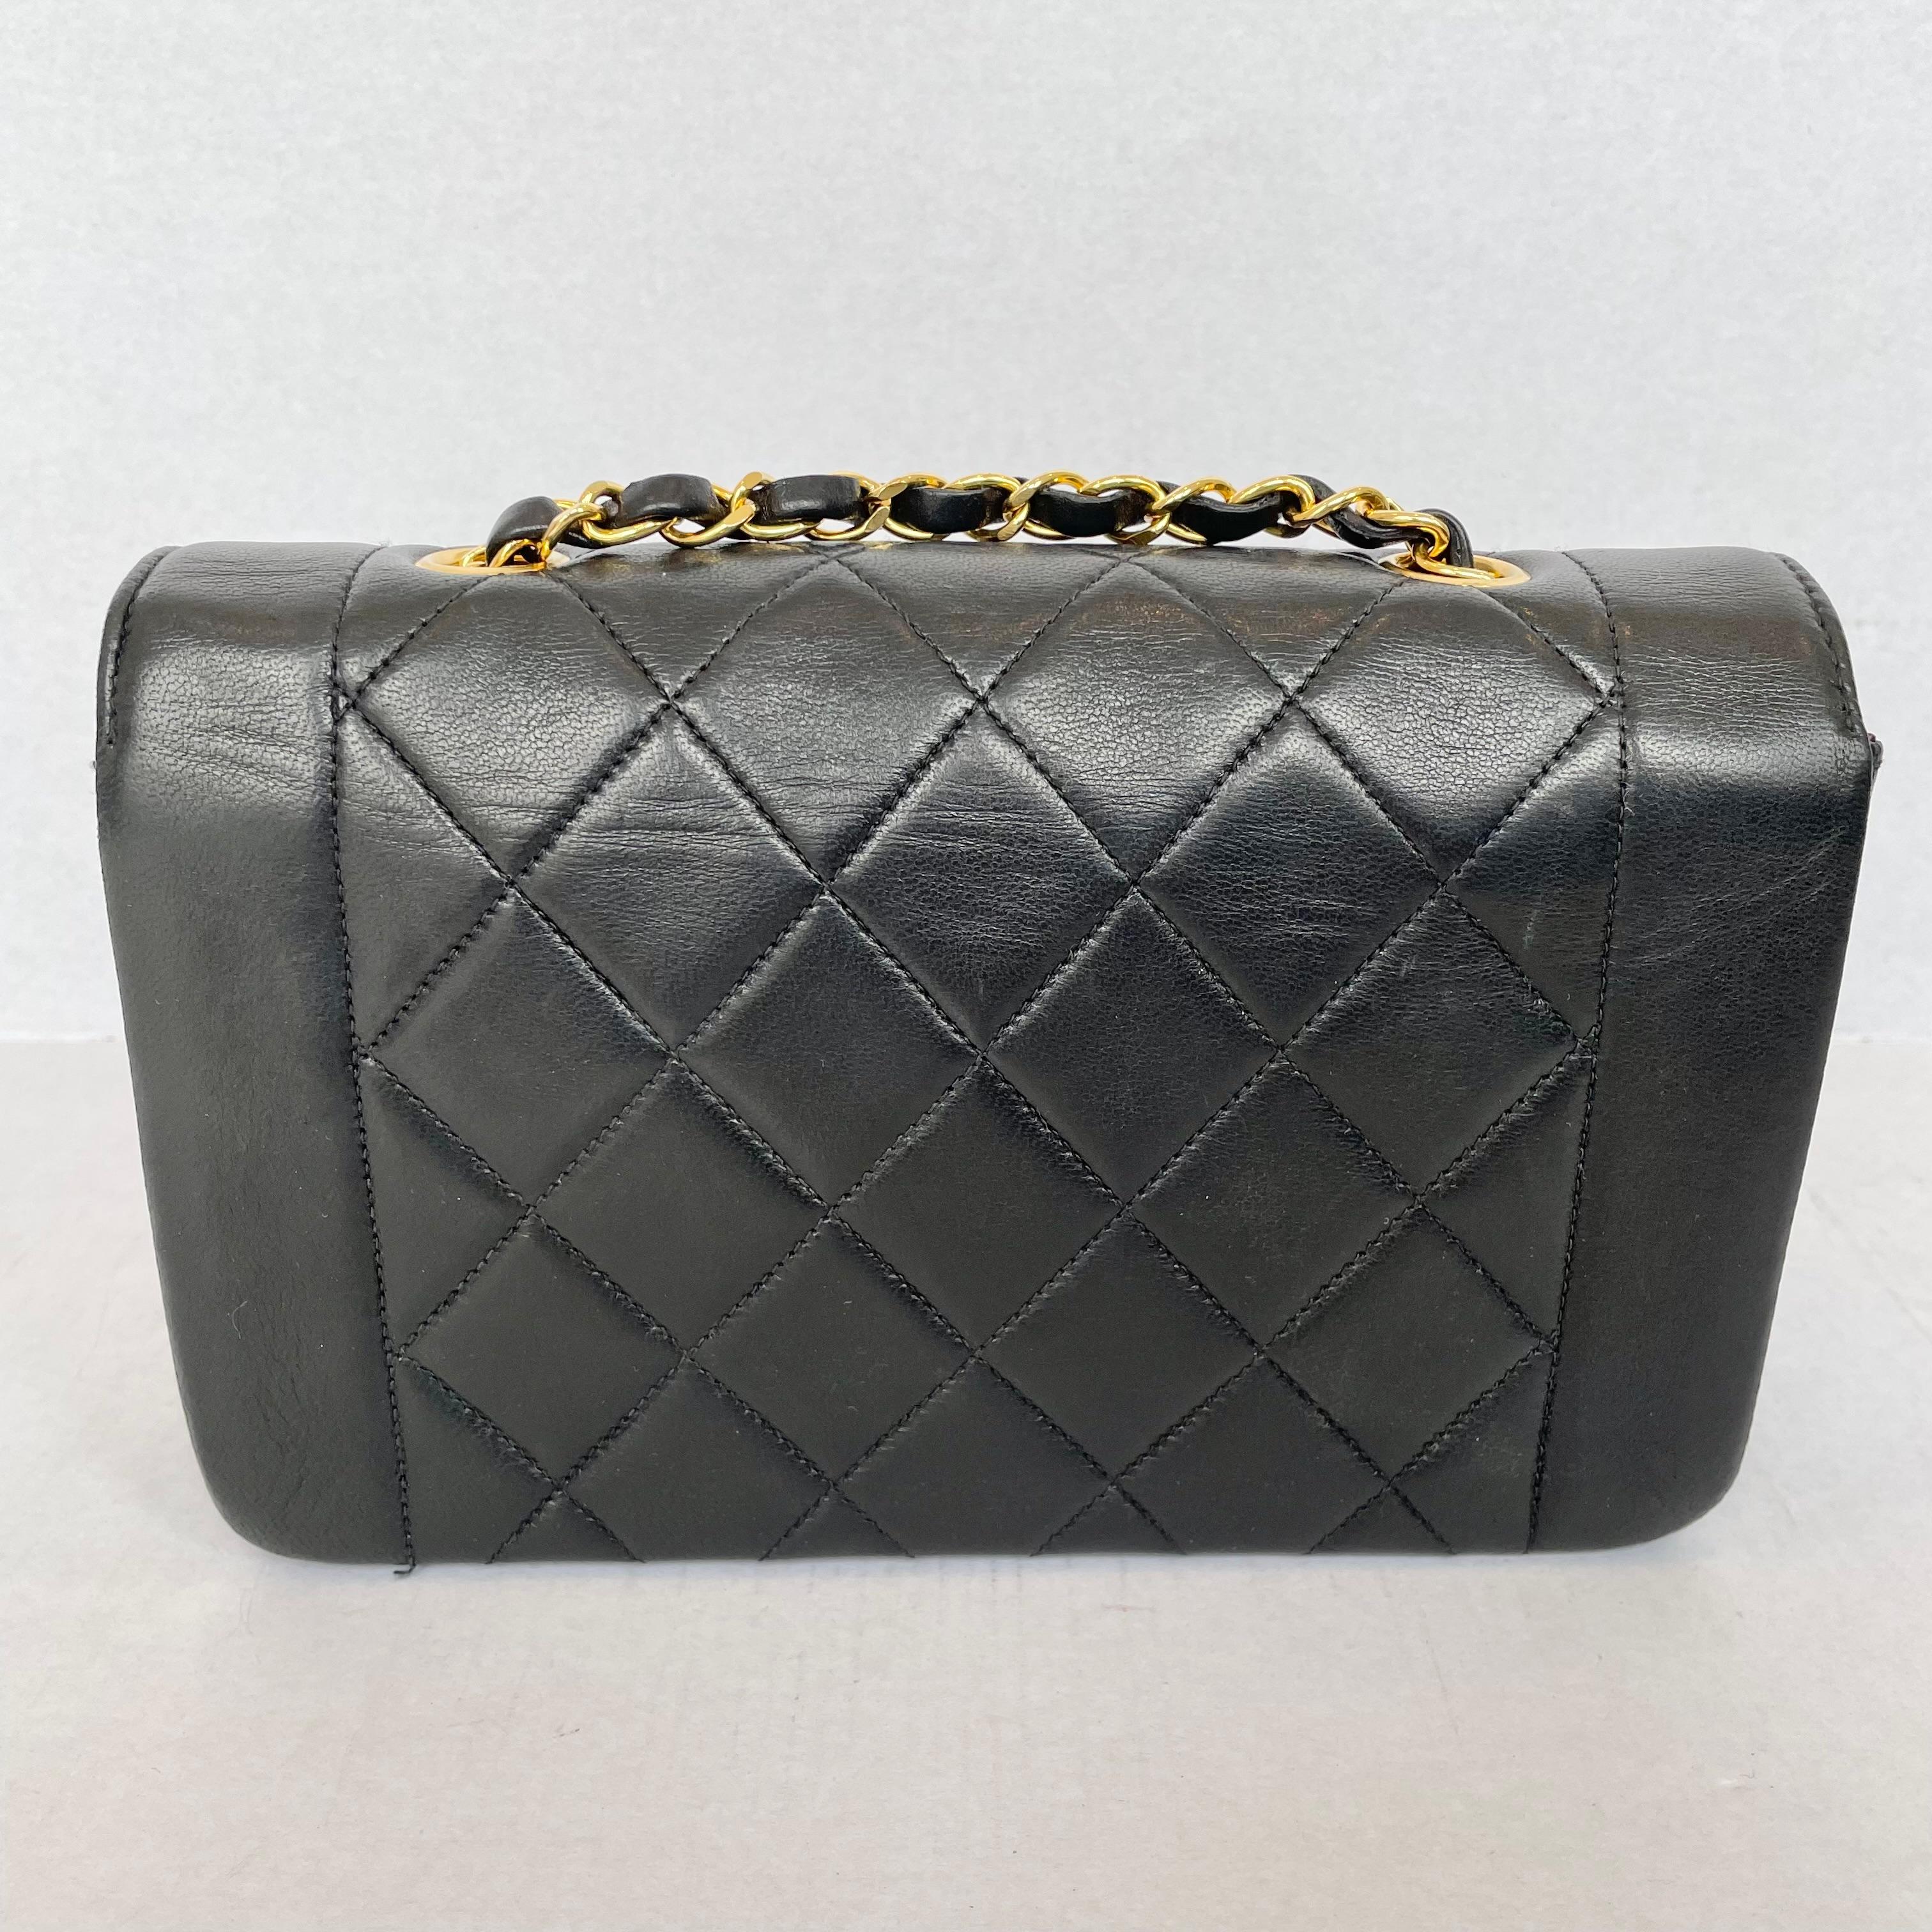 Metal Rare Chanel Diana Shoulder Bag Black Quilted Lambskin Leather, 1990s France For Sale